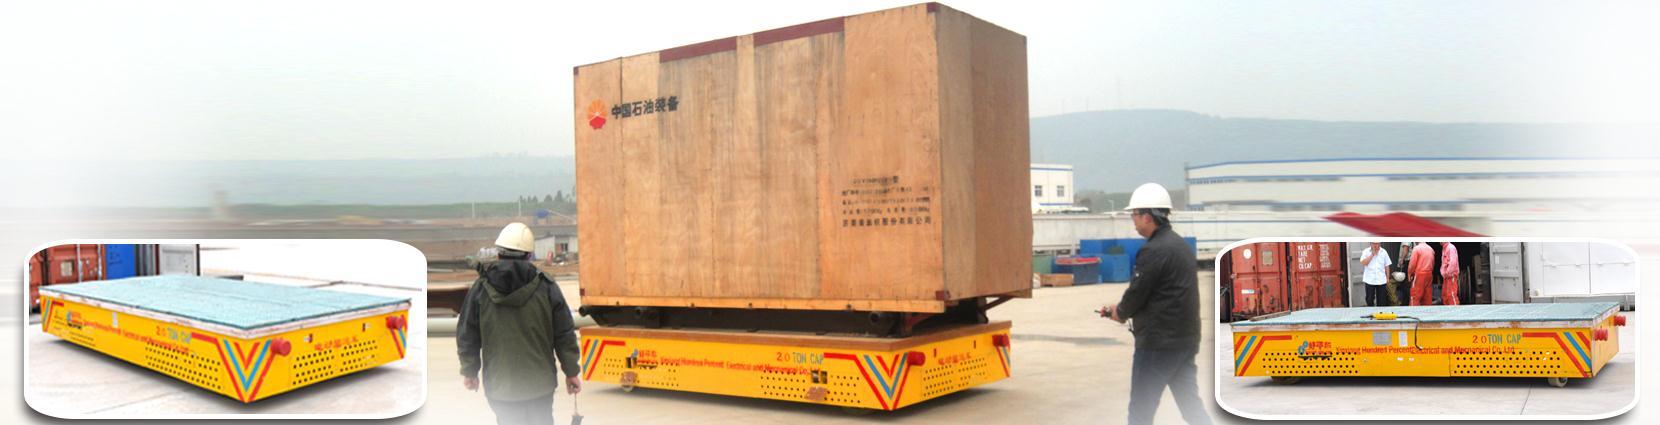 Steerable industrial platform trailer